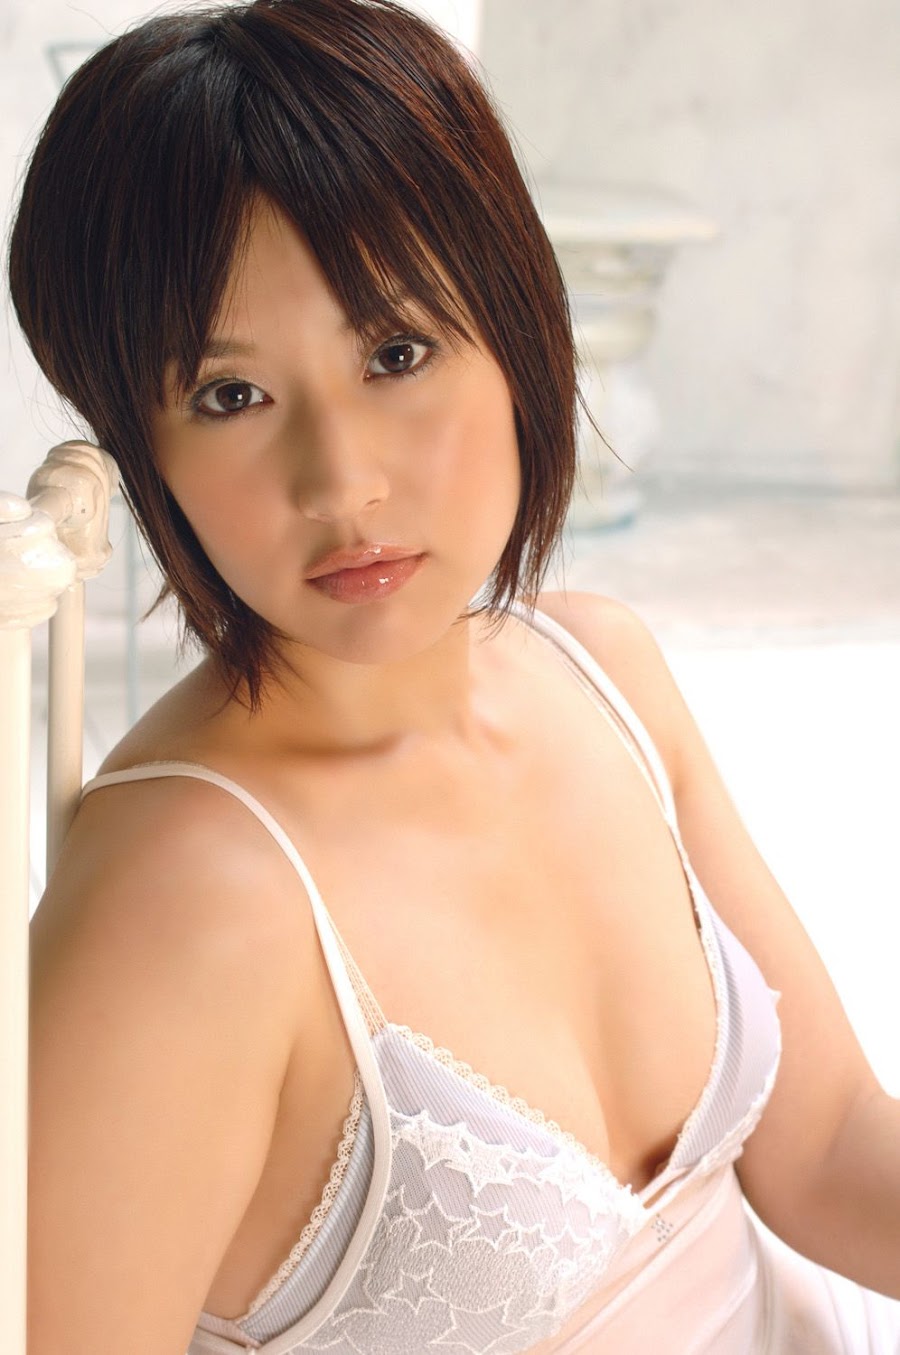 Misato Hirata - sexy Japanese gravure idol and actress